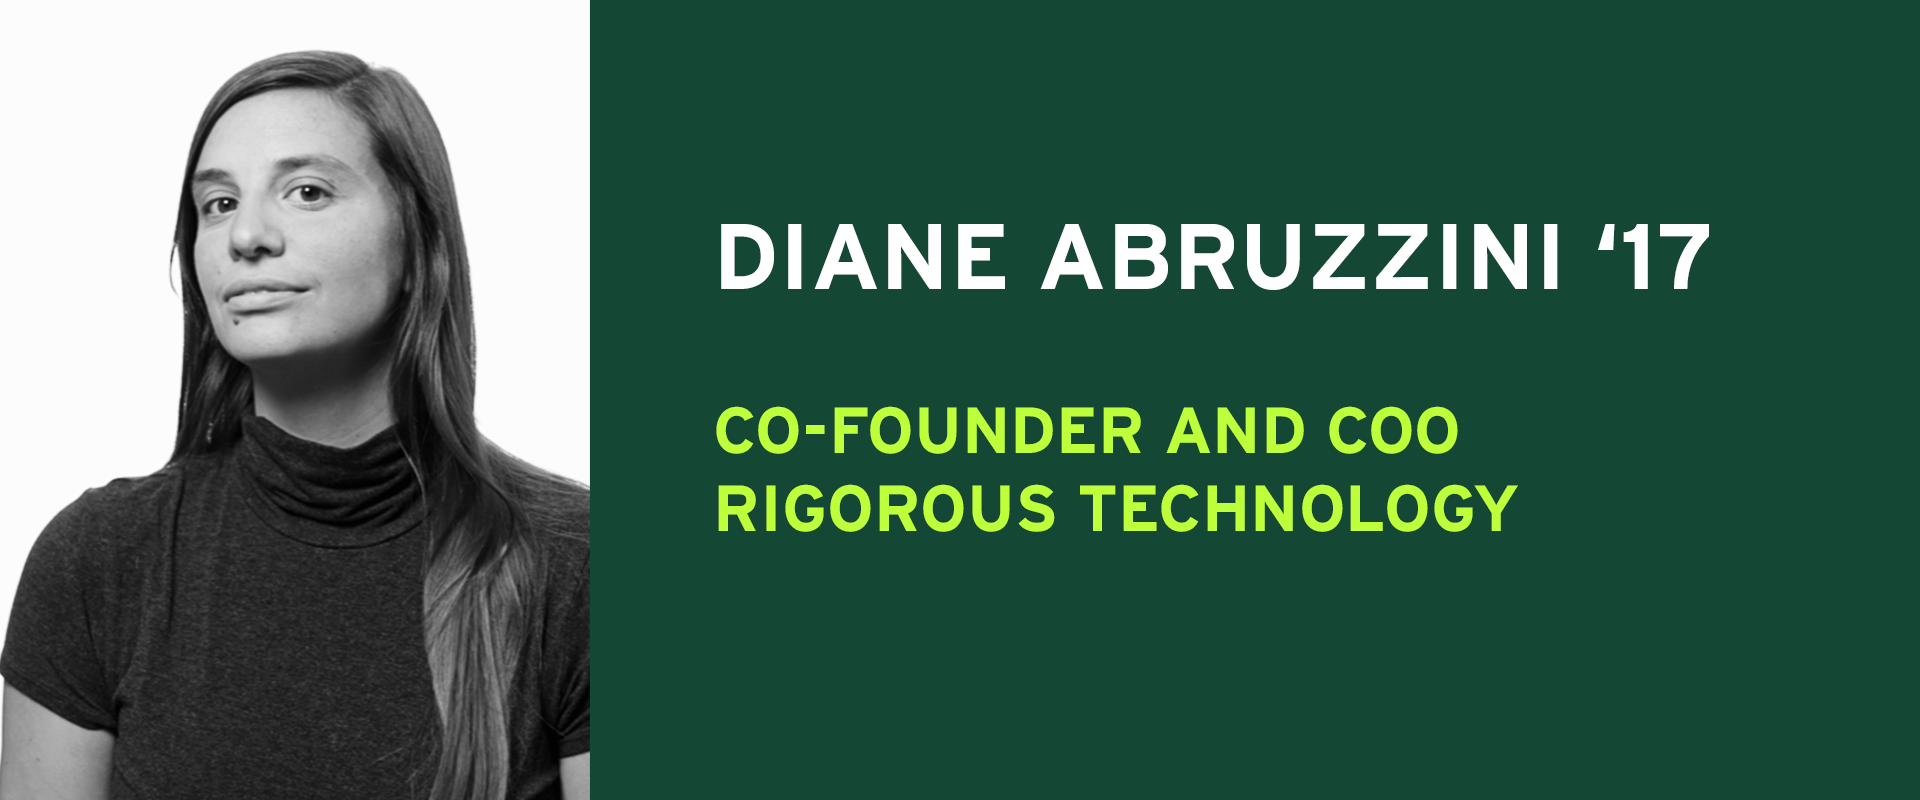 Diane Abruzzini '17 Co-Founder and COO Rigorous Technology